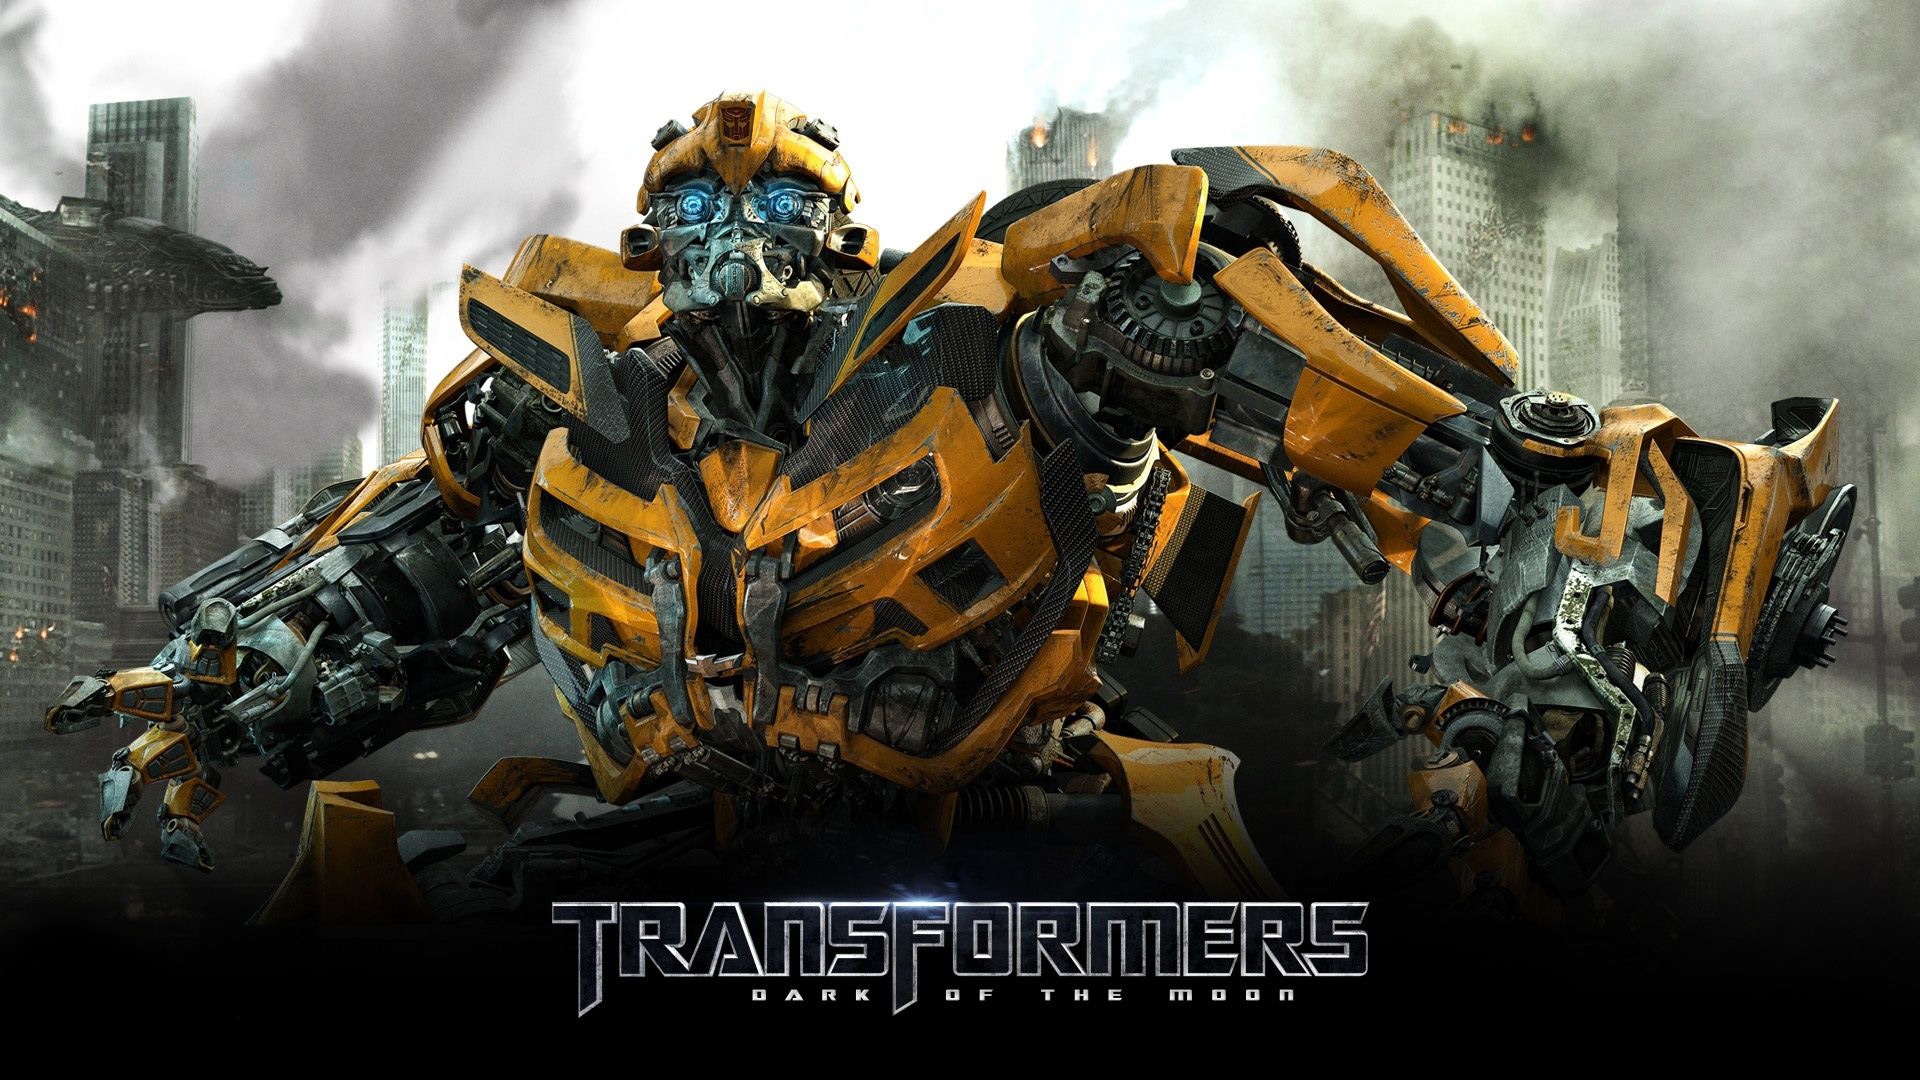 Bumblebee Transformers 2 Revenge Of The Fallen Wallpaper Hd